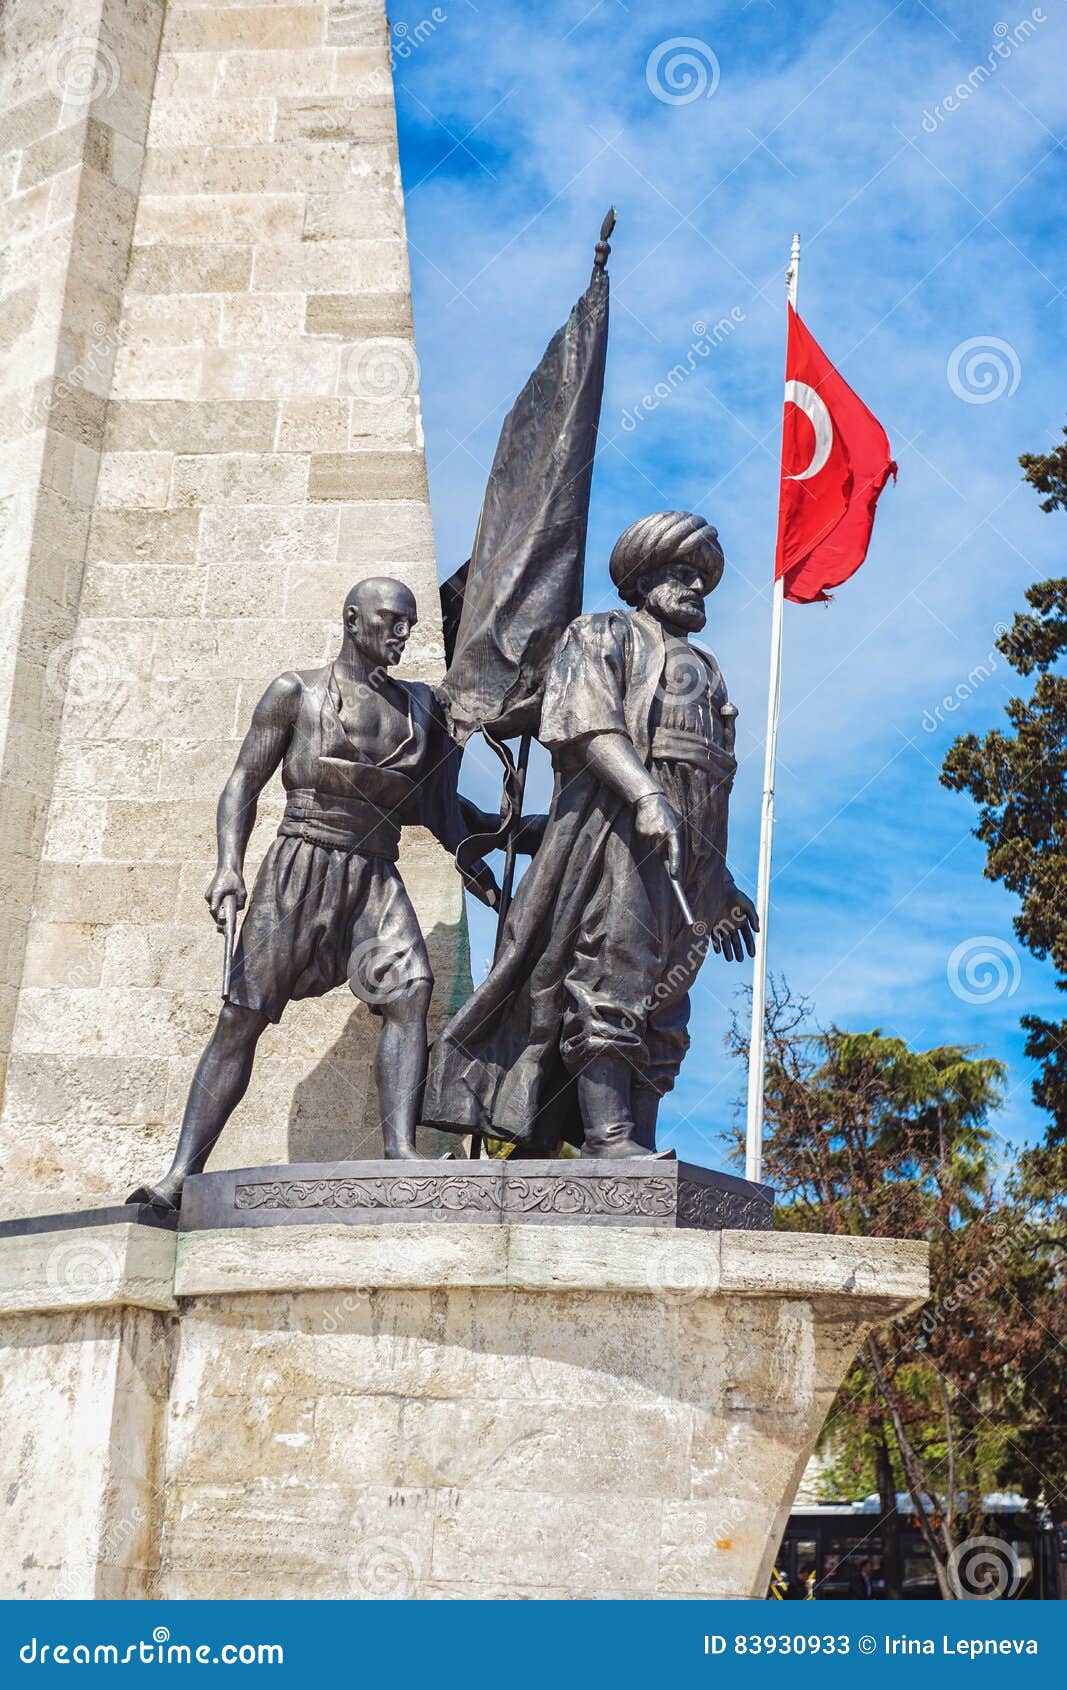 istanbul turkey. statue of barbarossa